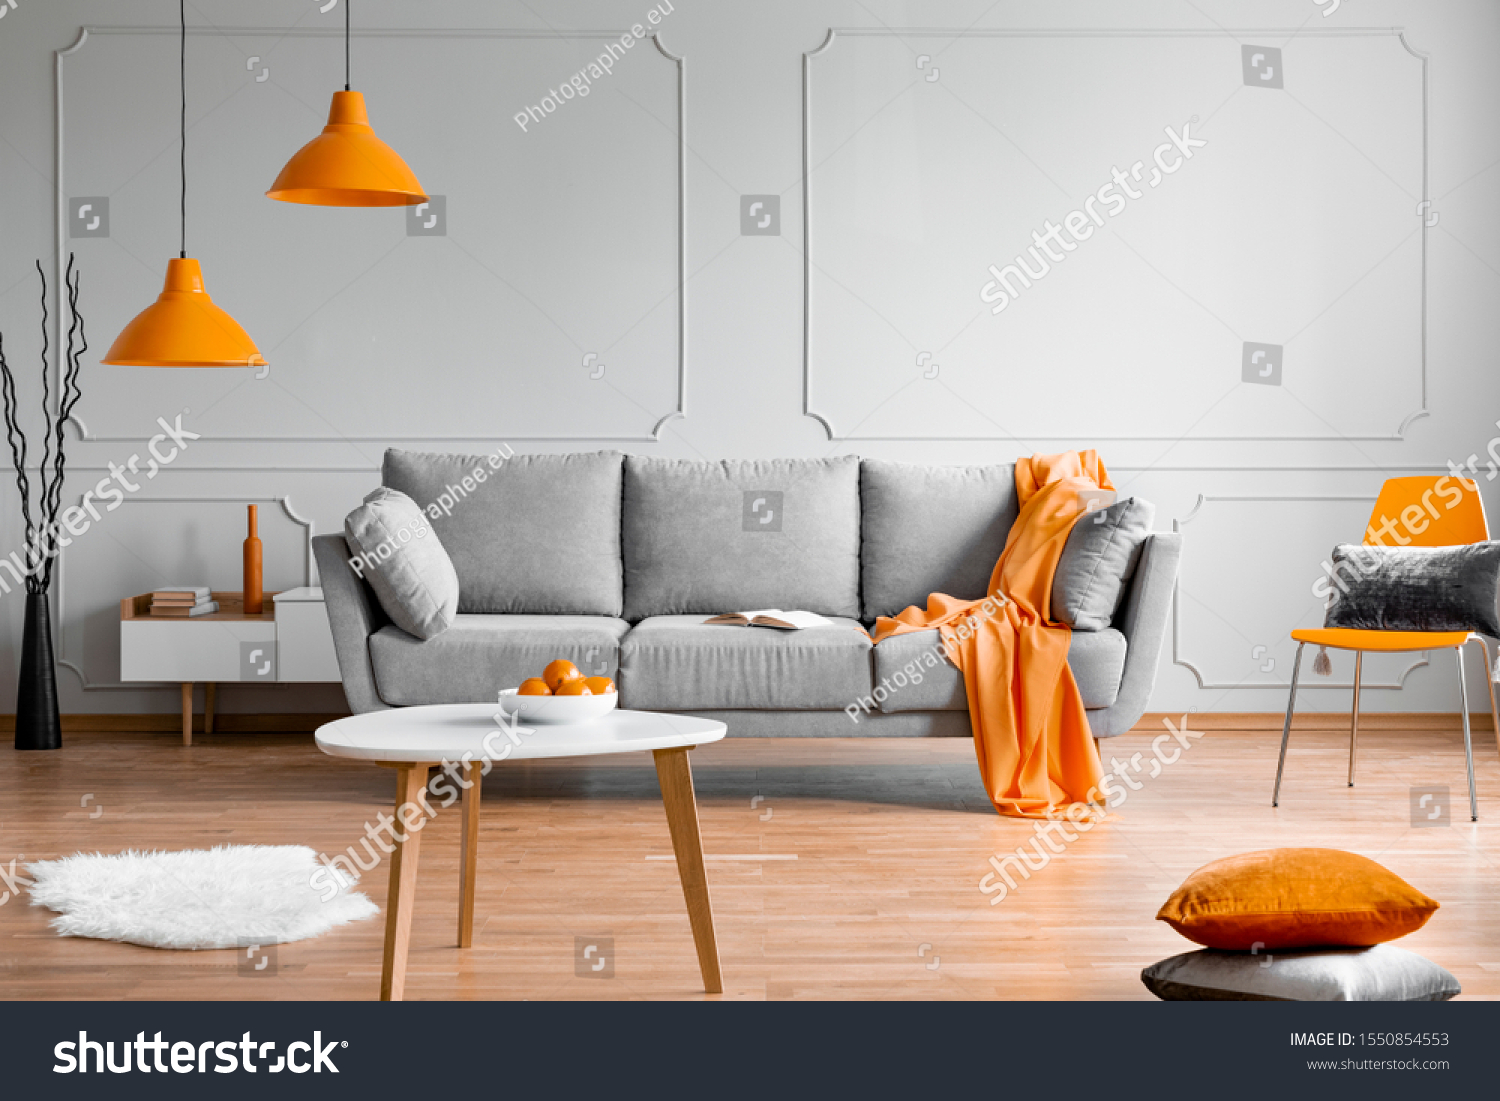 Stock Photo Orange Lamp Above Grey Scandinavian Sofa In Modern Interior 1550854553 